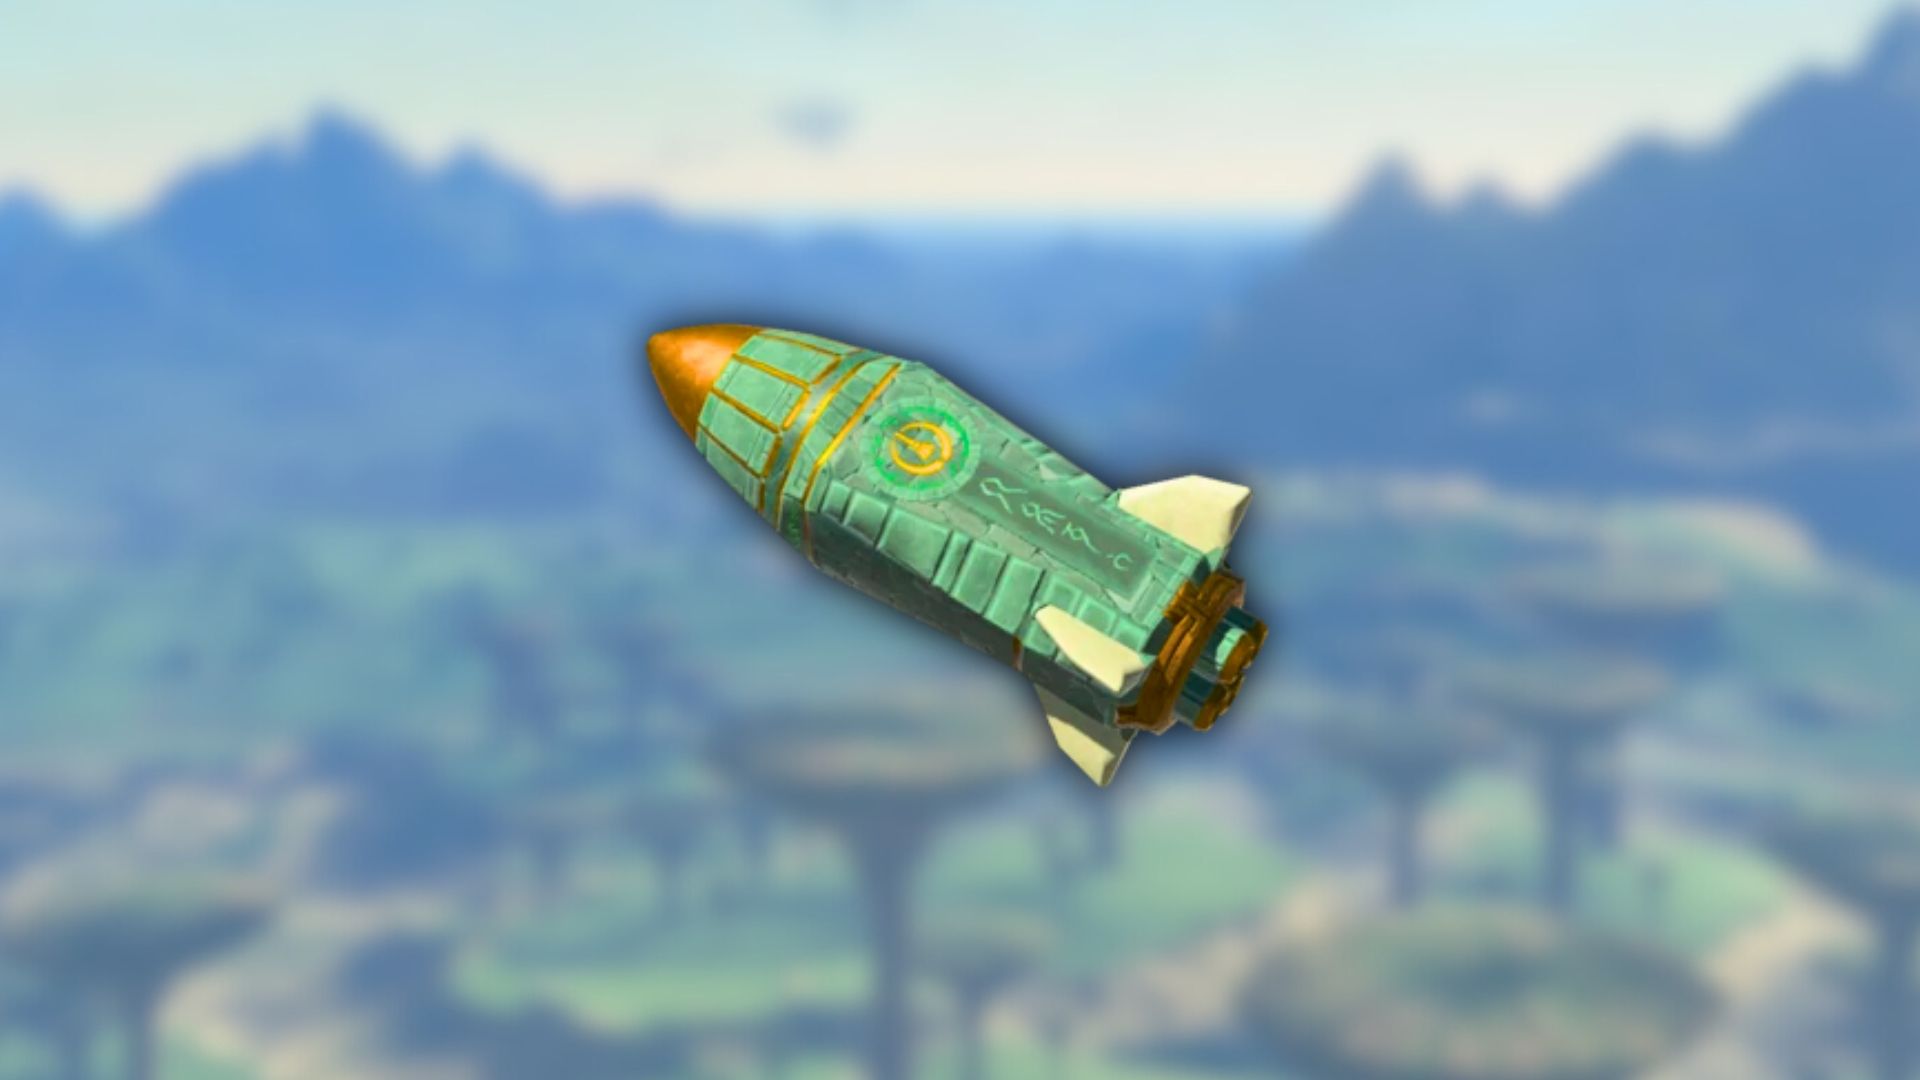 Zonai rocket over blurred hyrule background